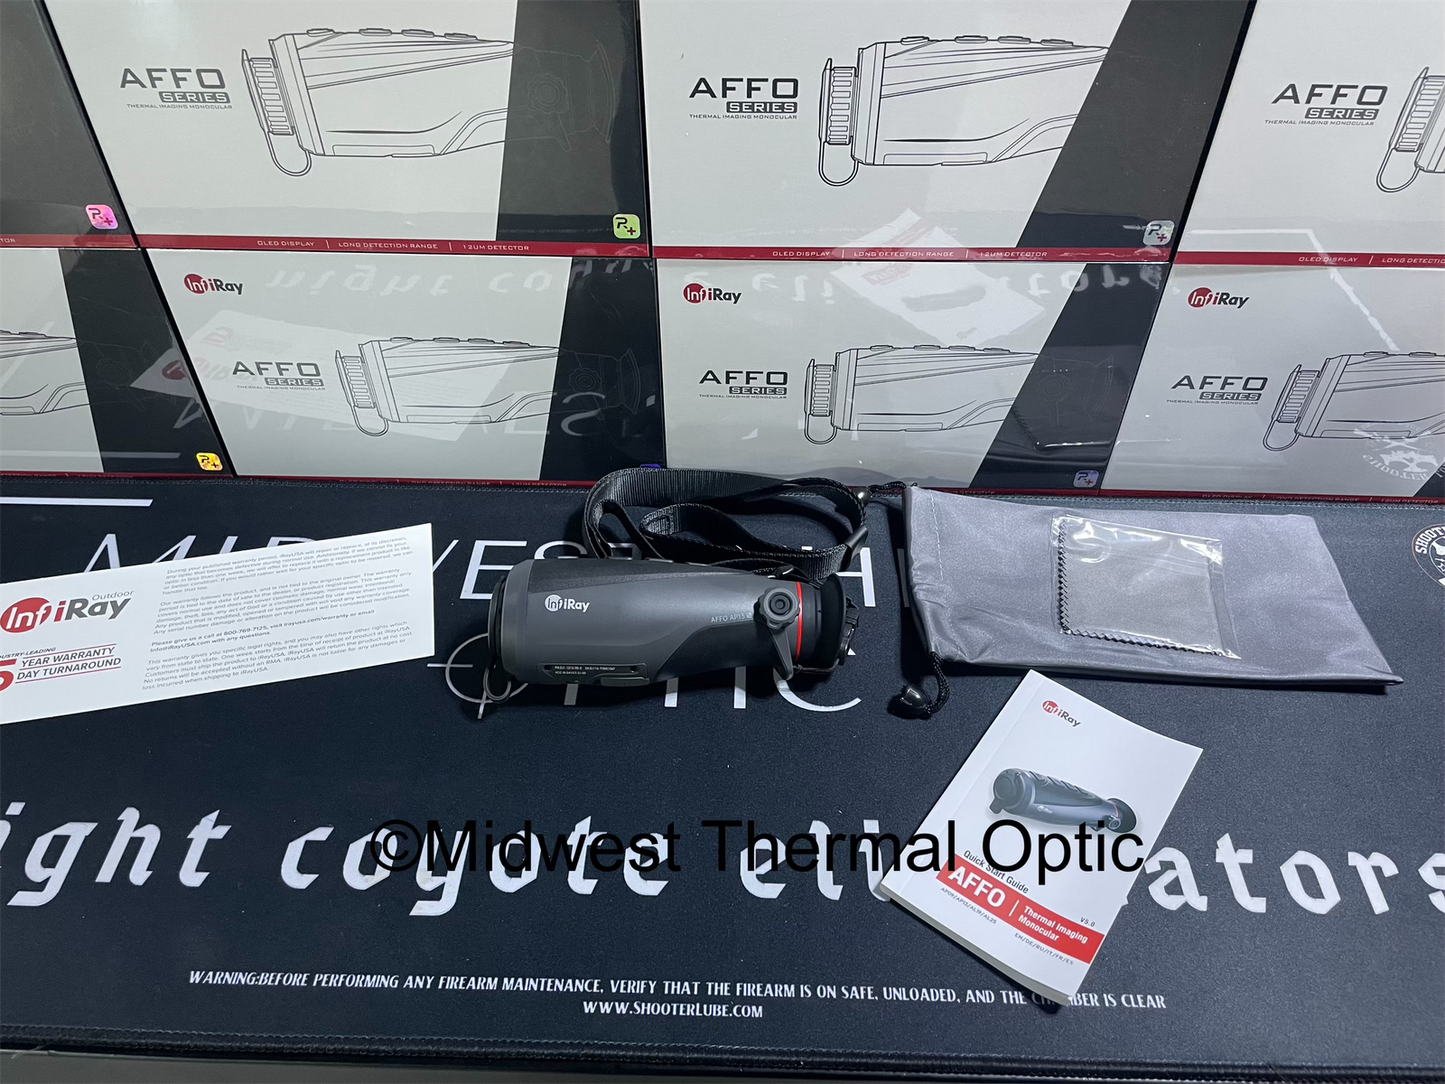 InfIray Outdoor AFFO R Handheld Thermal Monocular AP13 AFFOR+